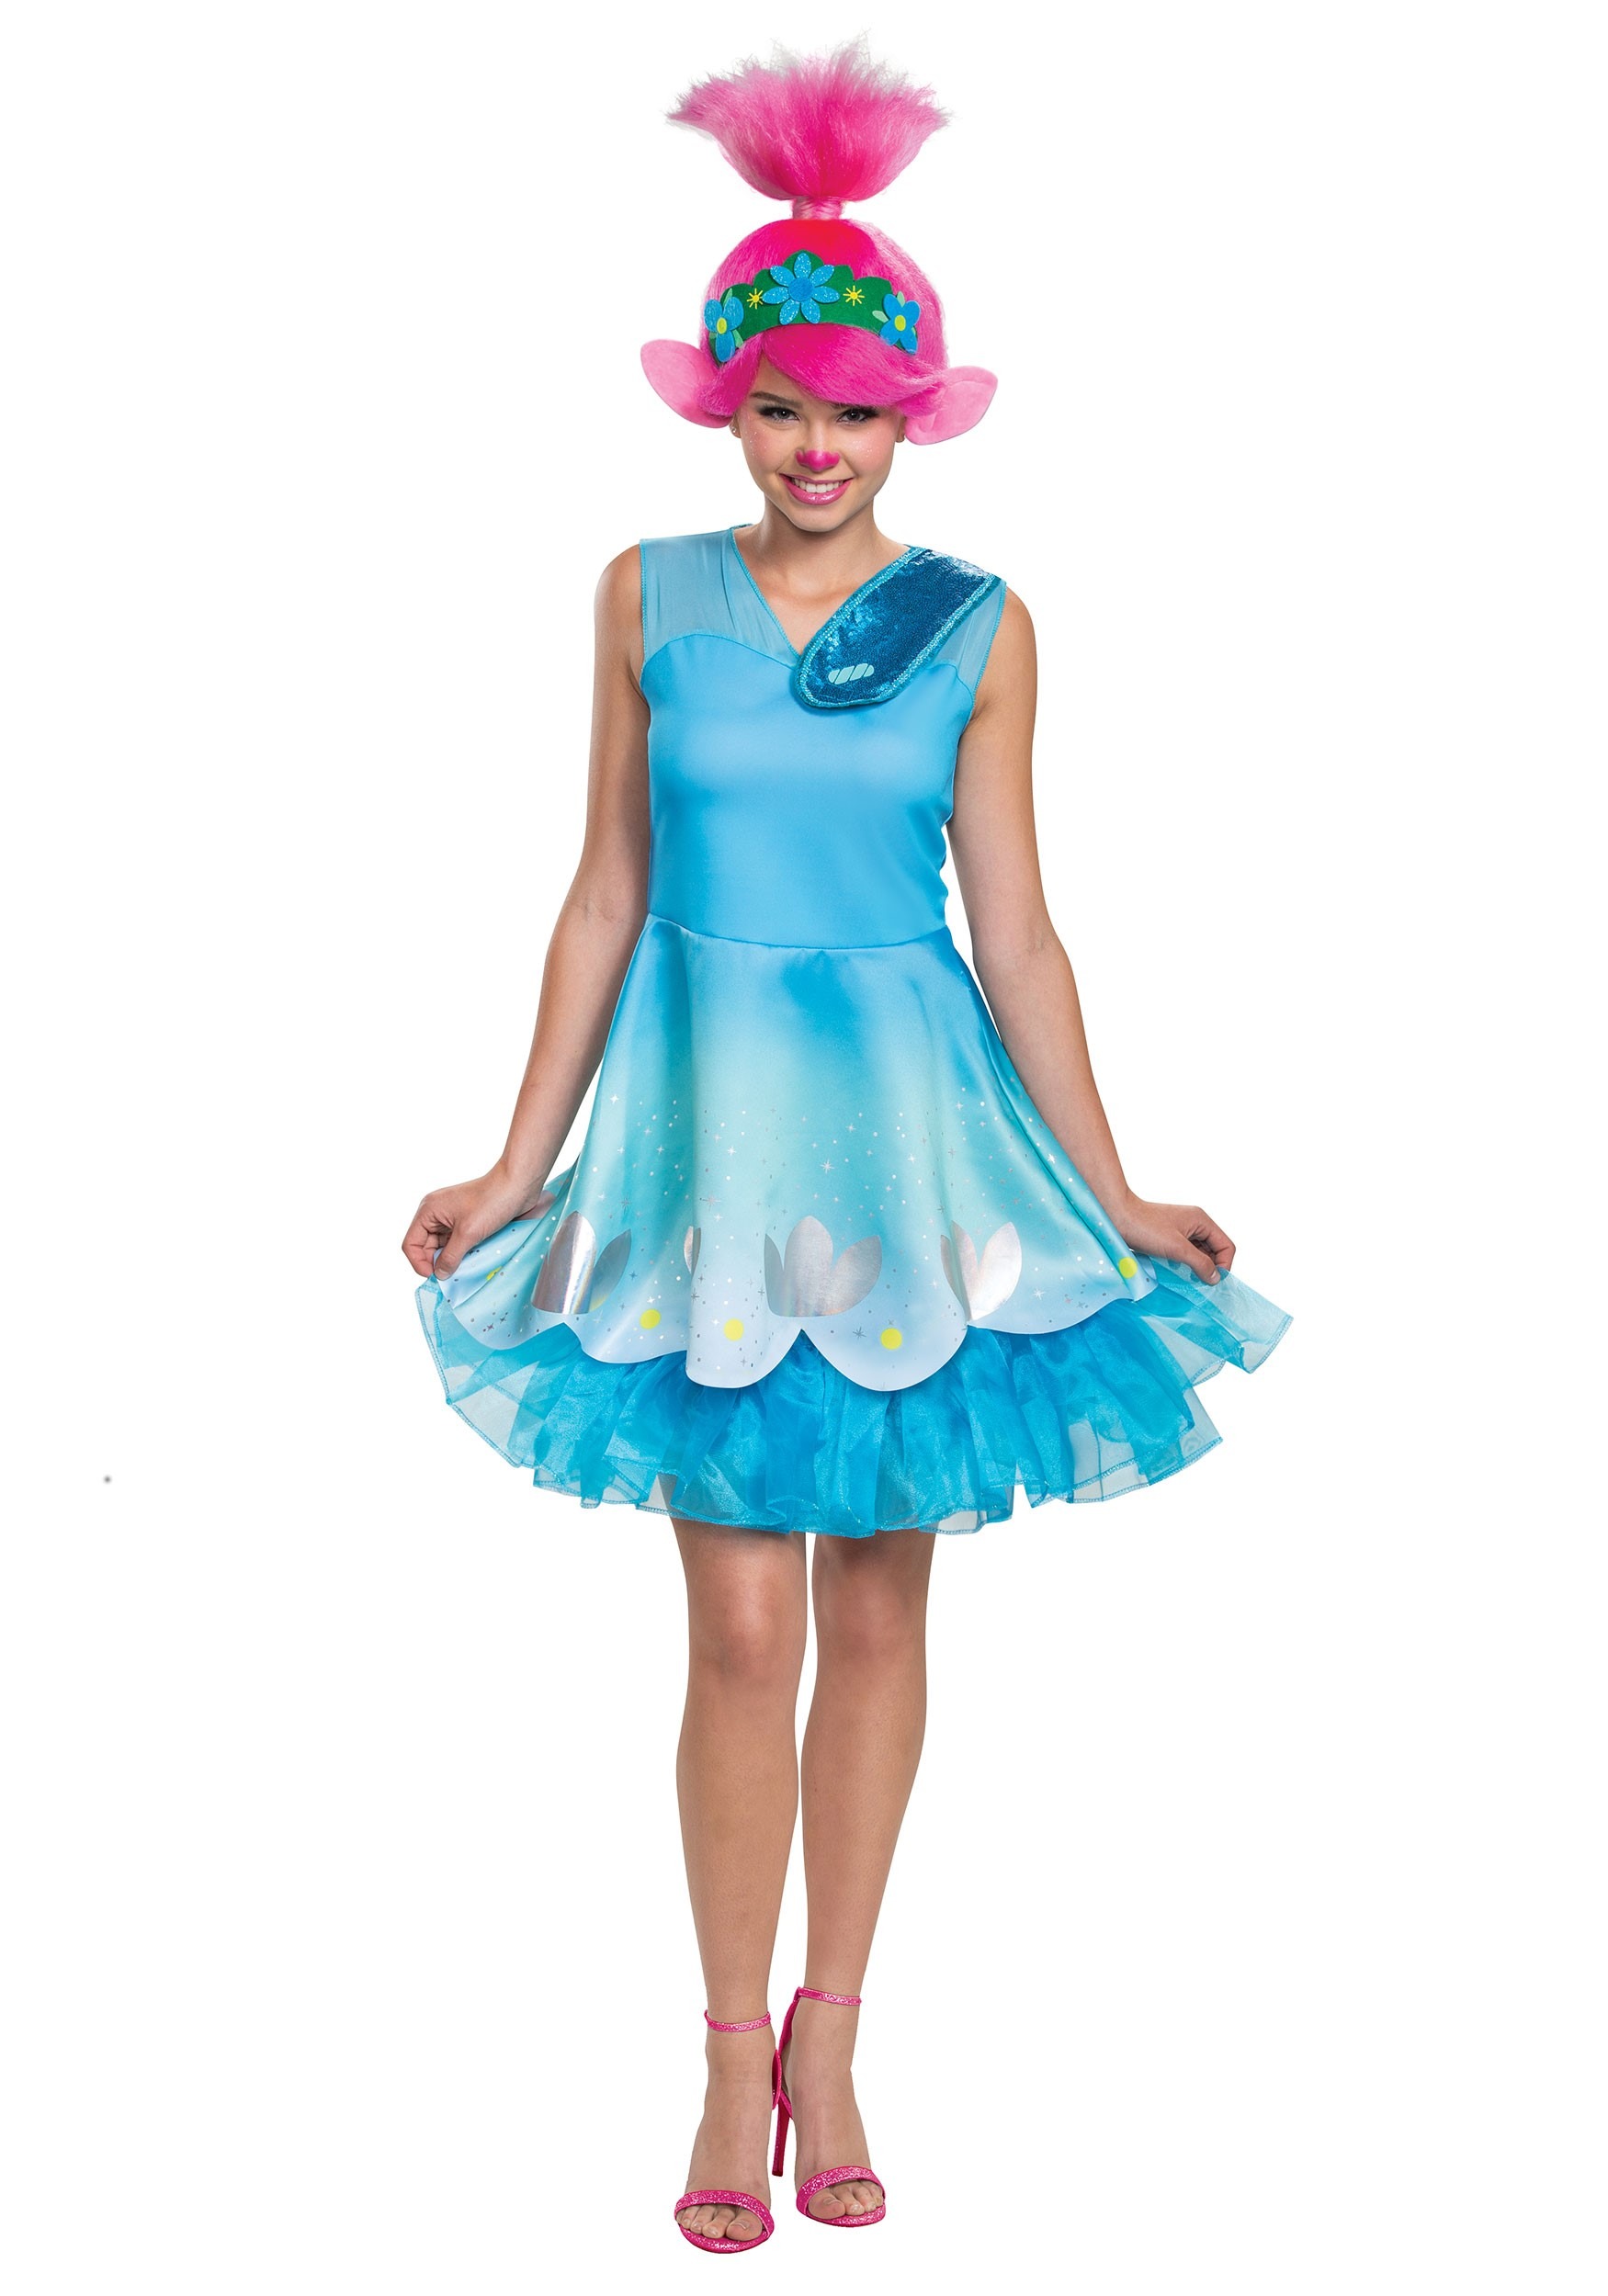 Photos - Fancy Dress Dreamworks Disguise Trolls World Tour Poppy Costume for Women Pink/Blue DI105189 